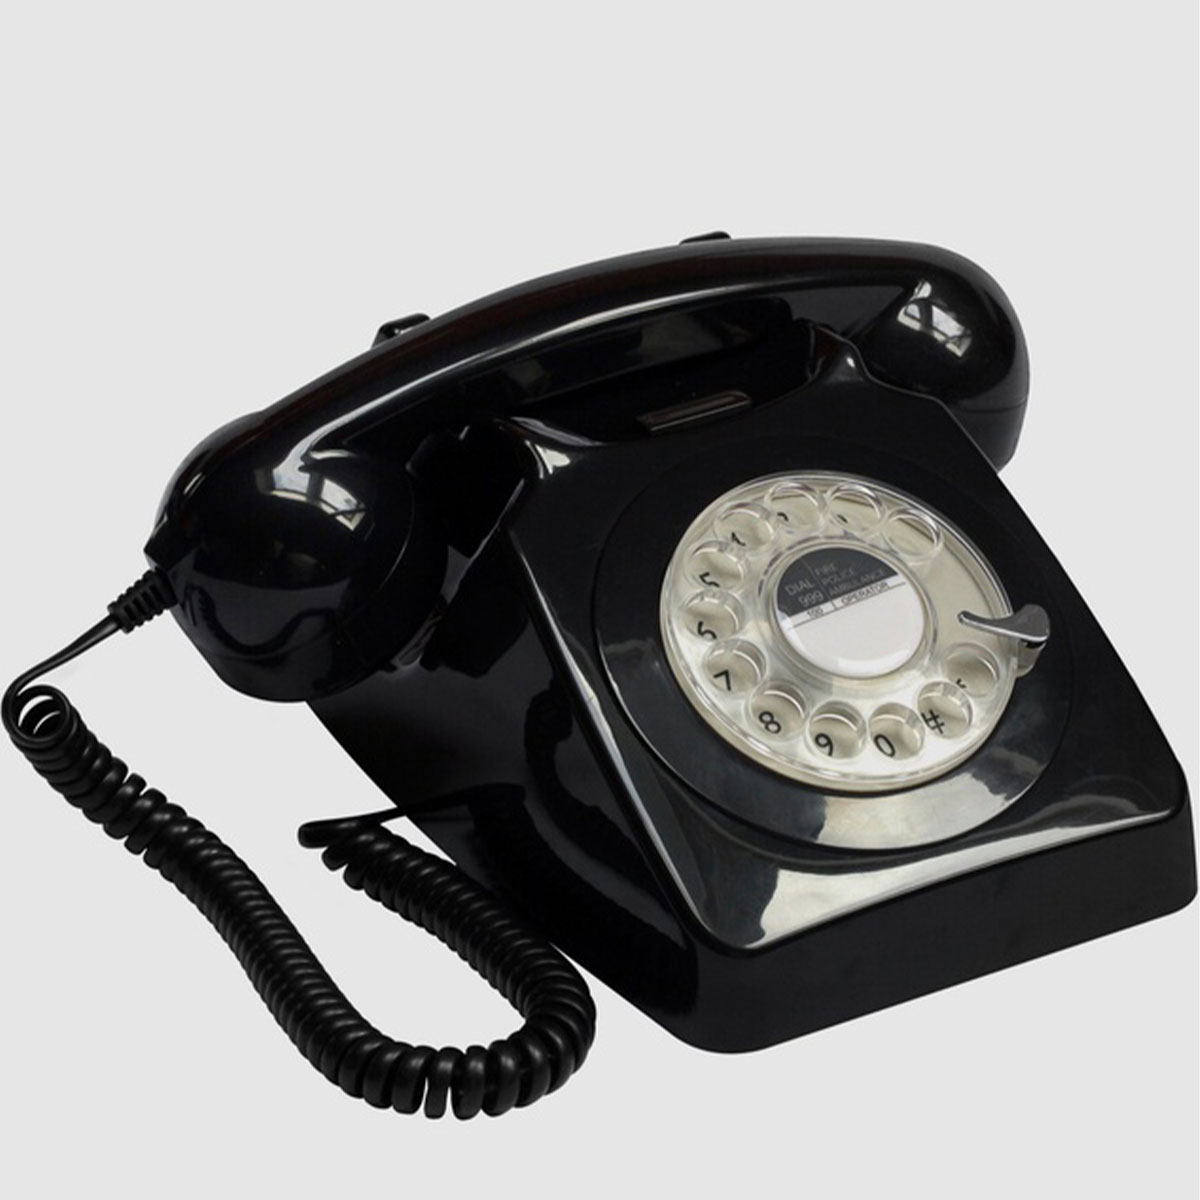 Telefono vintage a disco gpo rotary phone nero - Myho